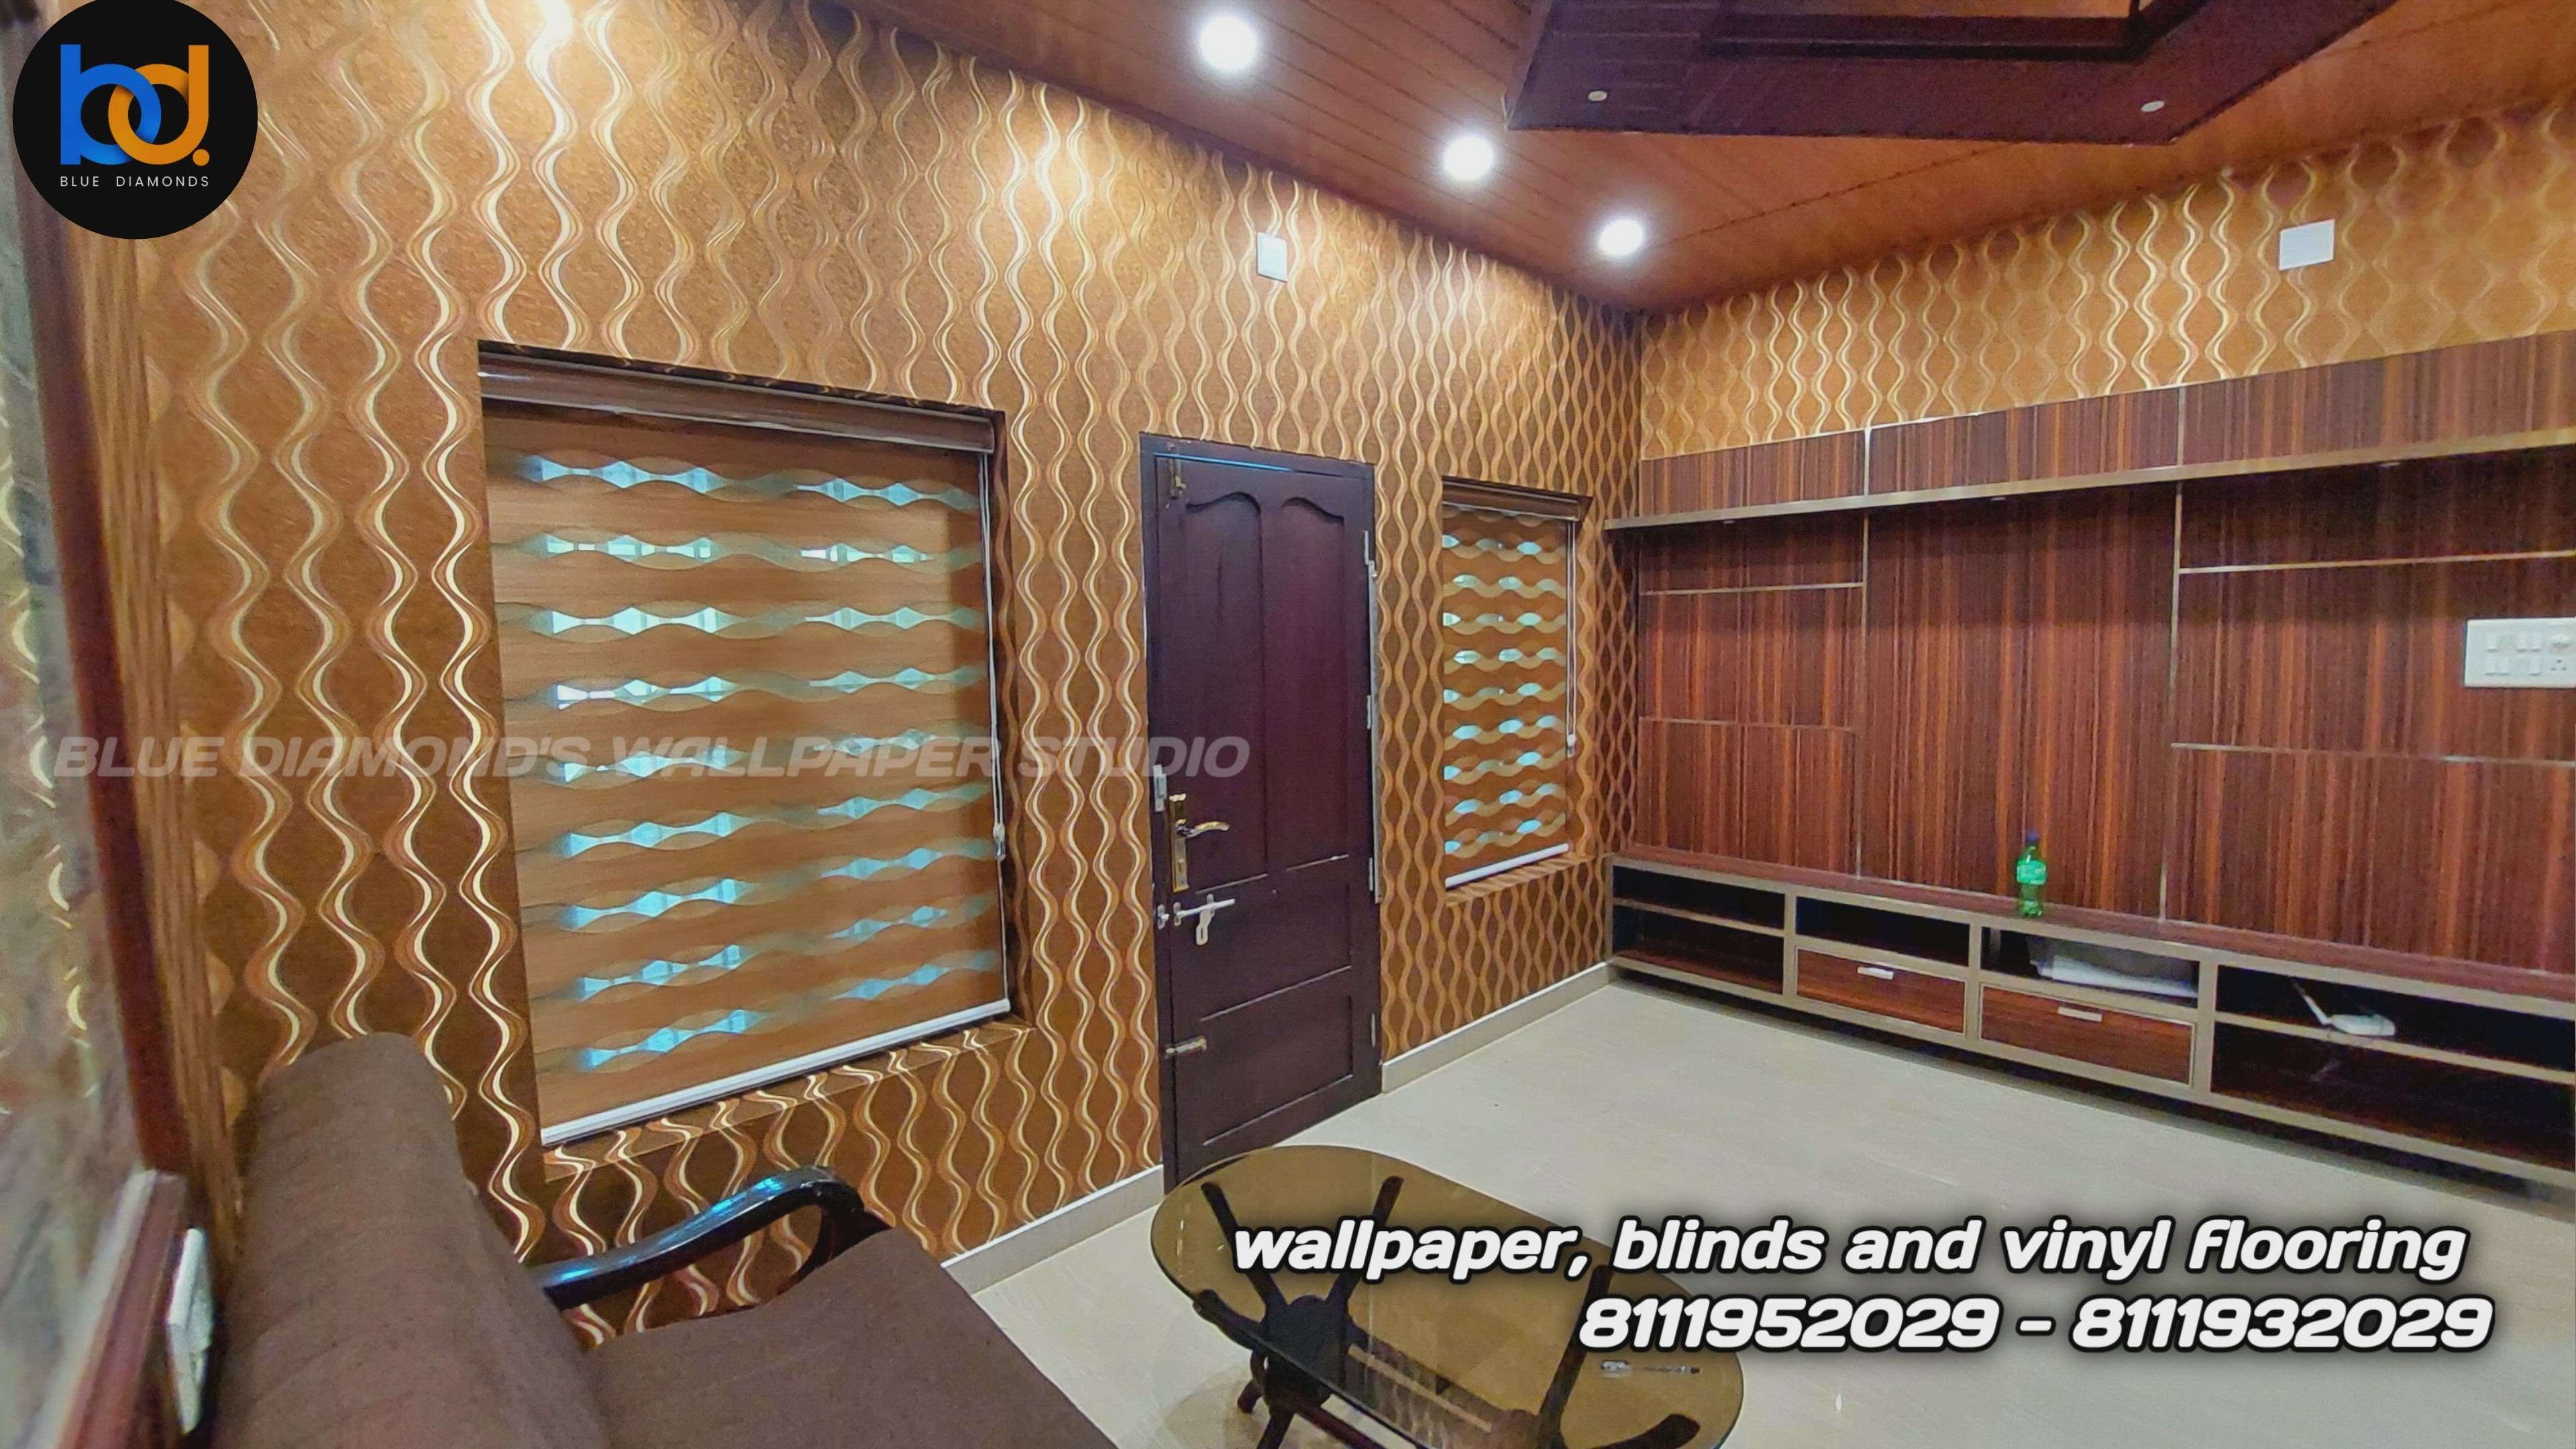 wallpaper, blinds and vinyl flooring 81119 5 2029 81119 3 2029